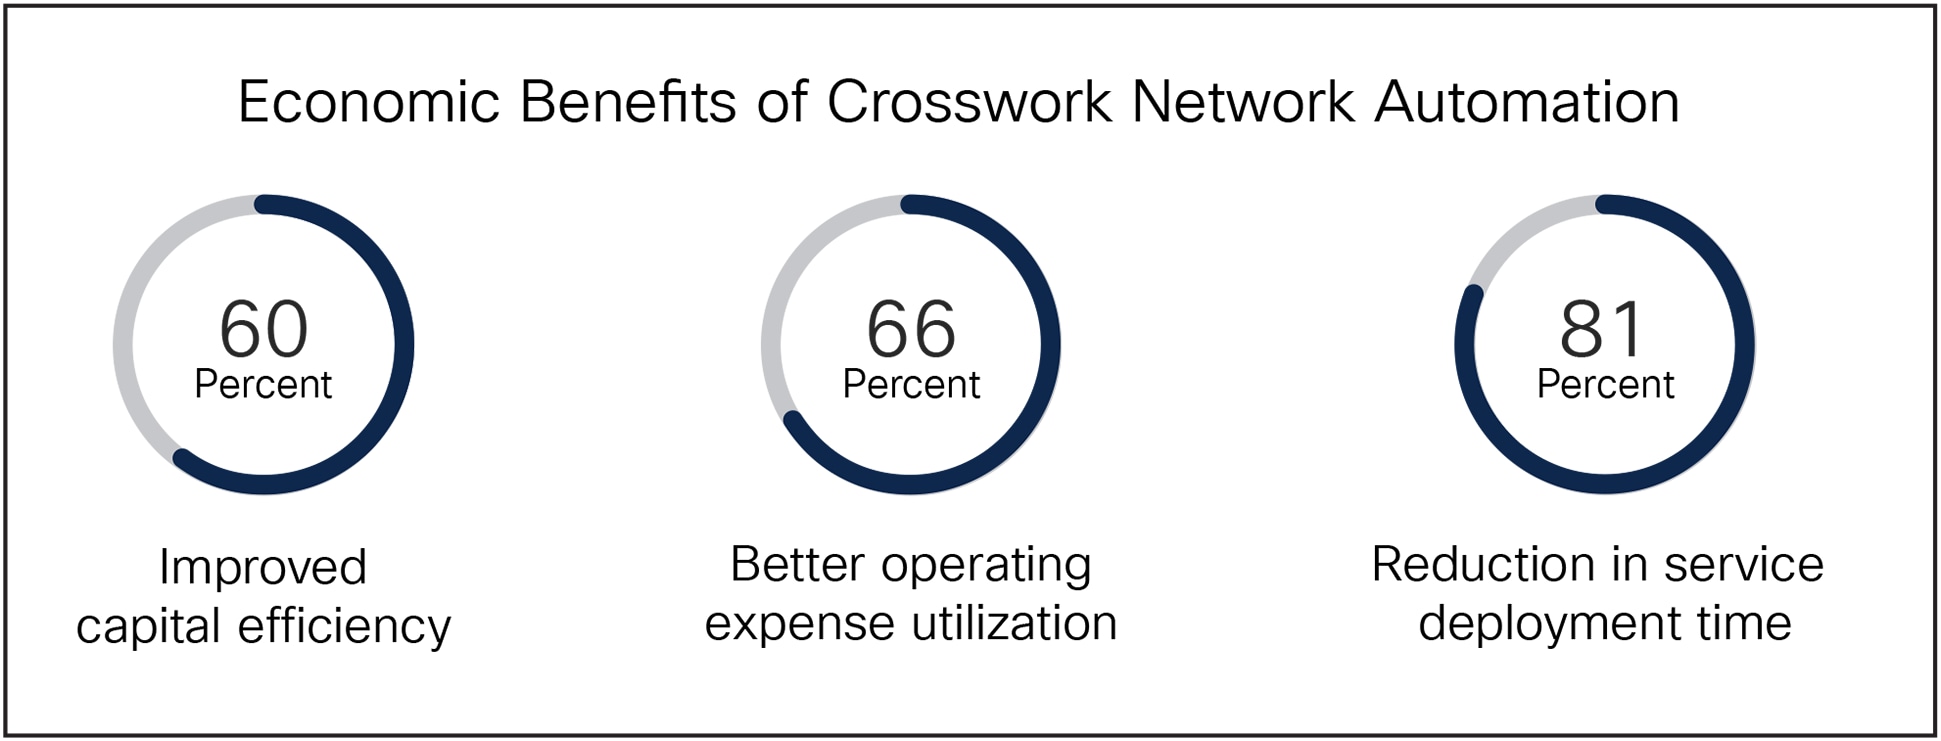 Economic Benefits of Crosswork Network Automation